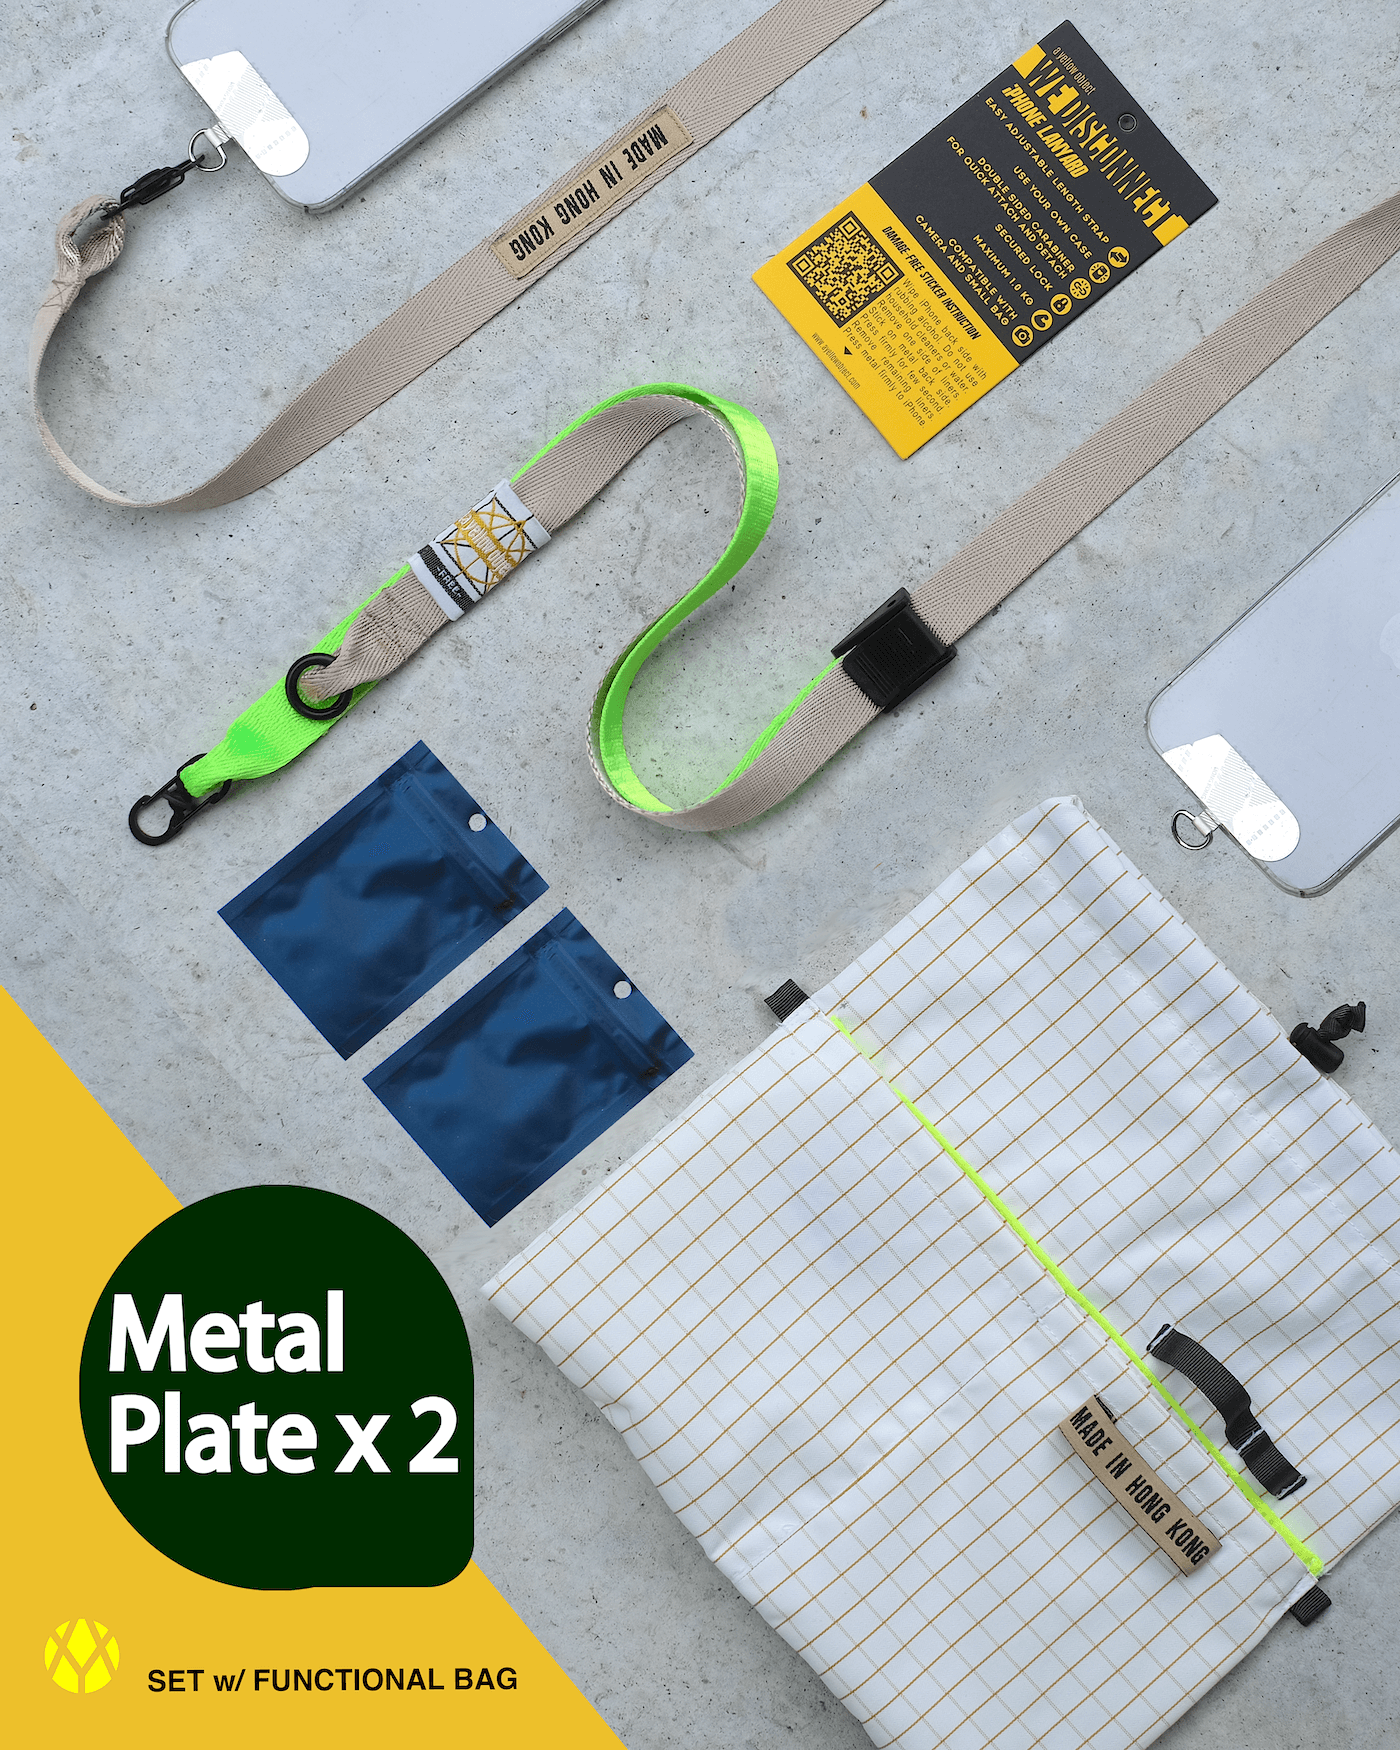 We Disconnect 2.0 Phone Lanyard (Khaki) - Metal Plate x 2 - a yellow object